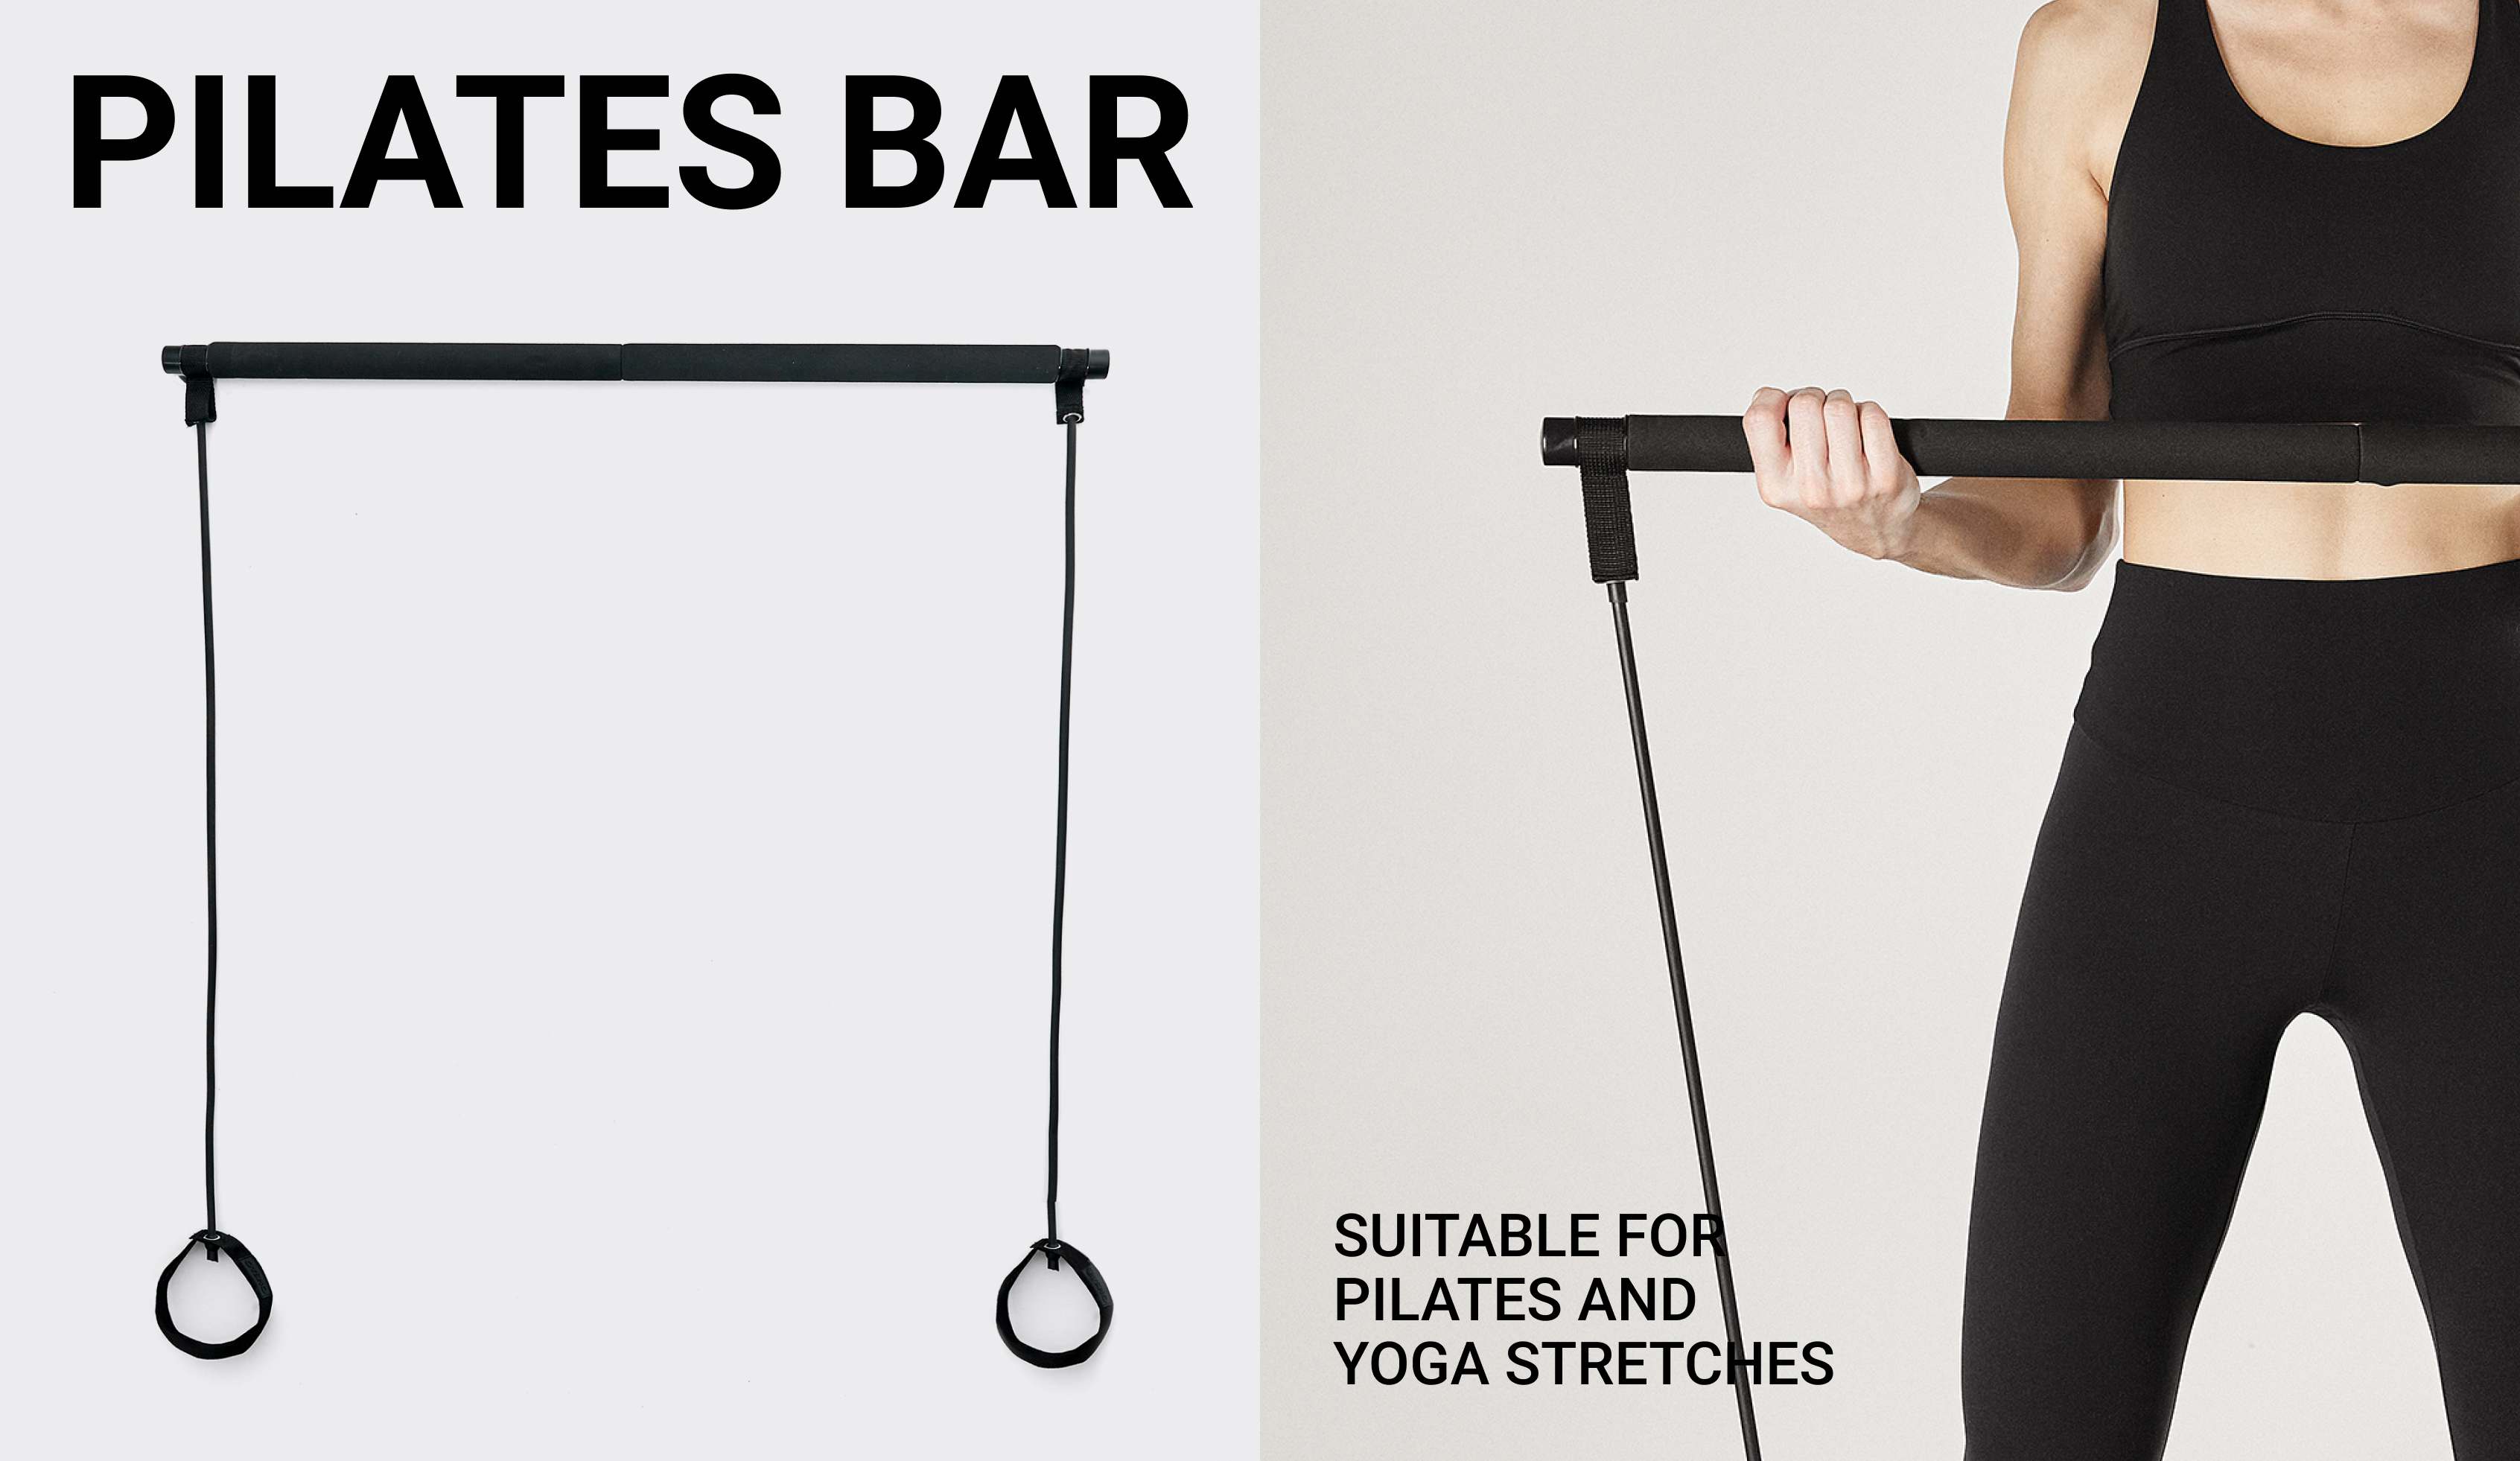 Pilates bar